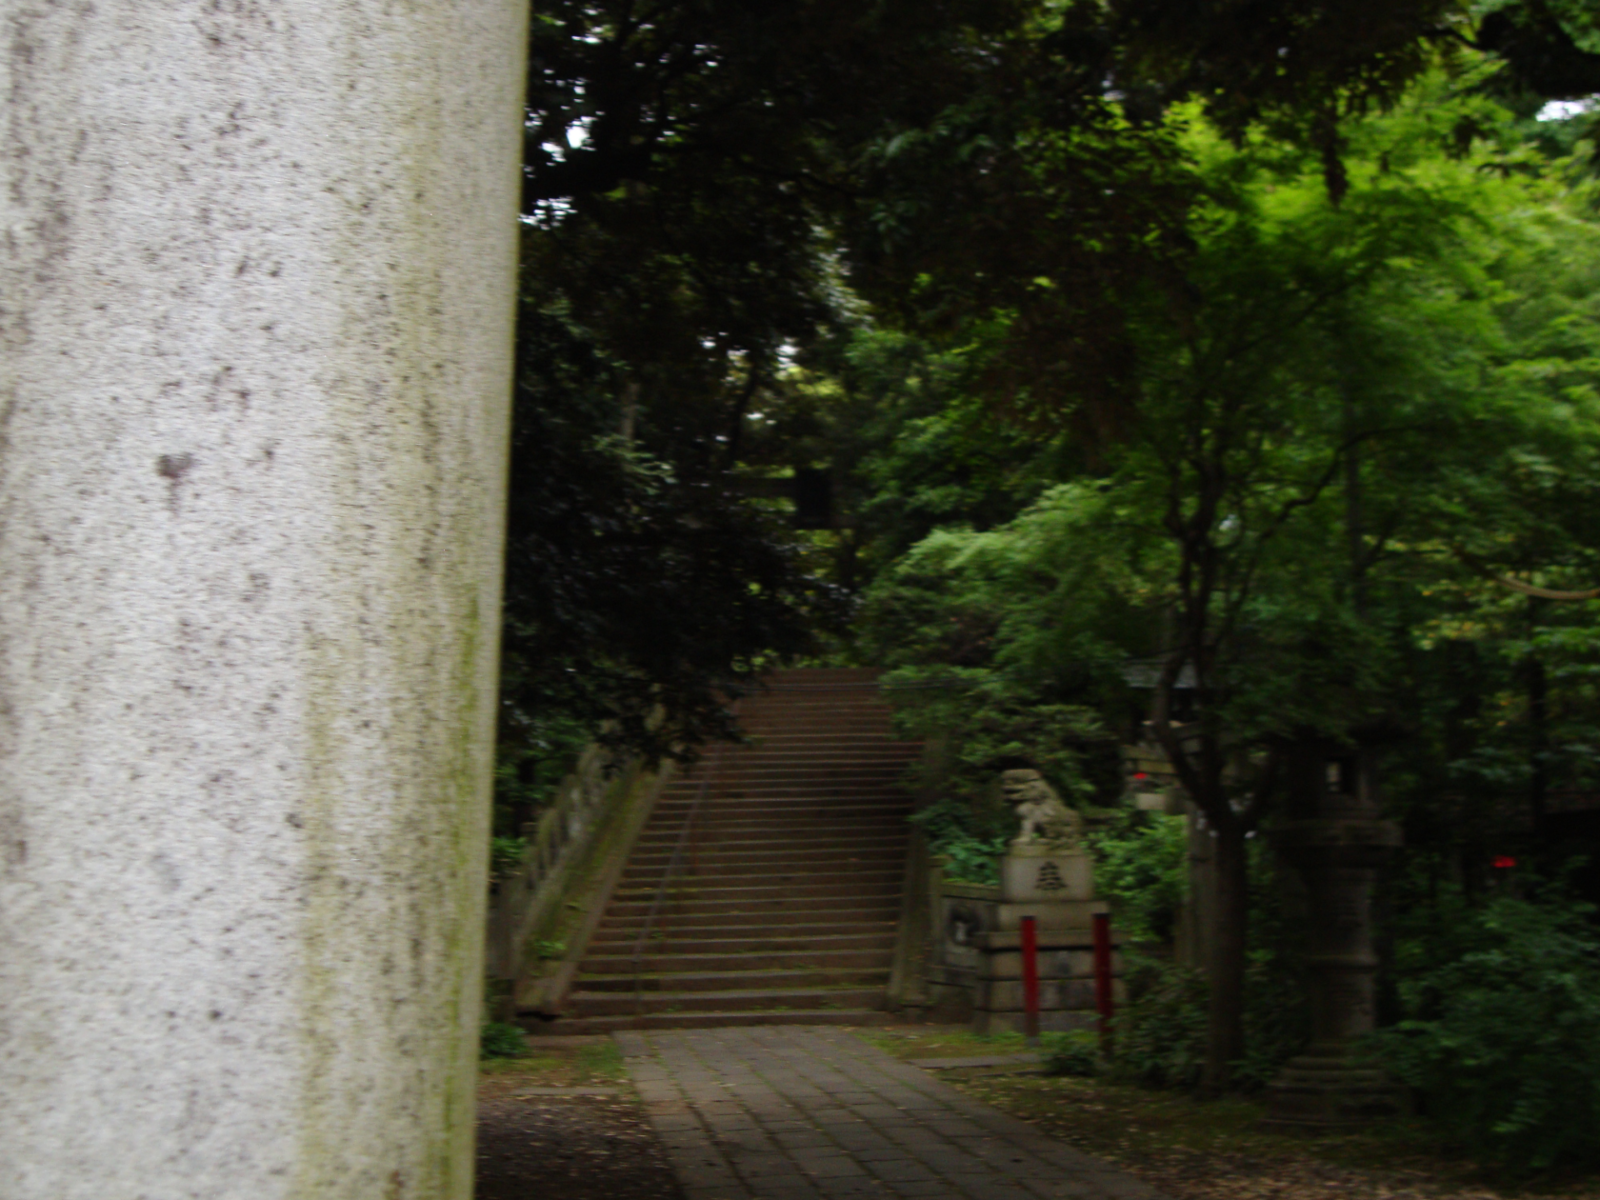 Photo of the stairs at the Hikawa Jinja shrine.